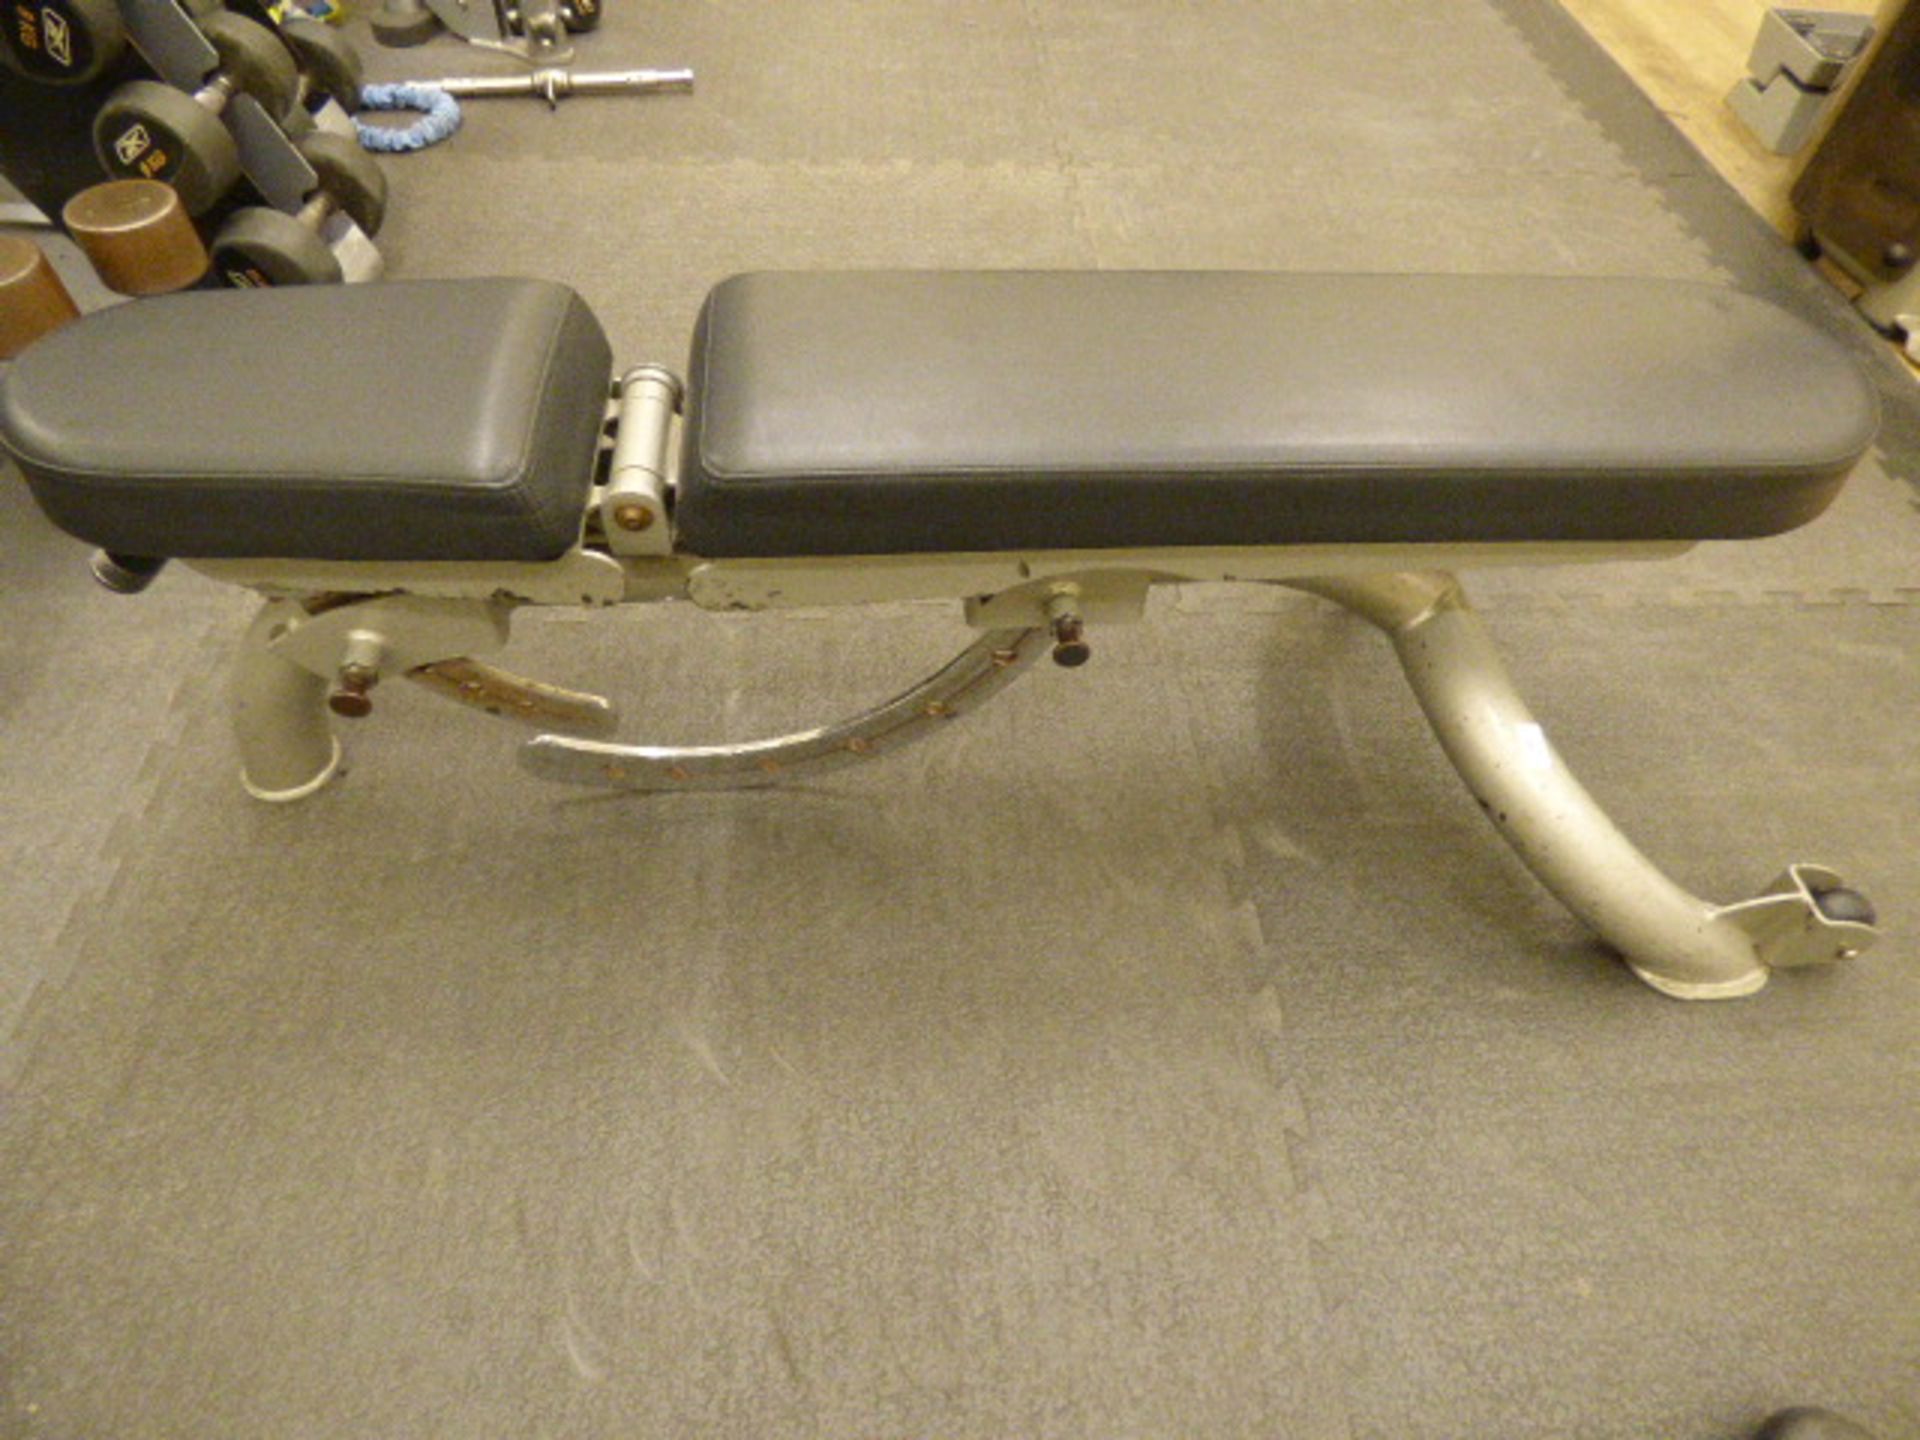 *Adjustable gym bench